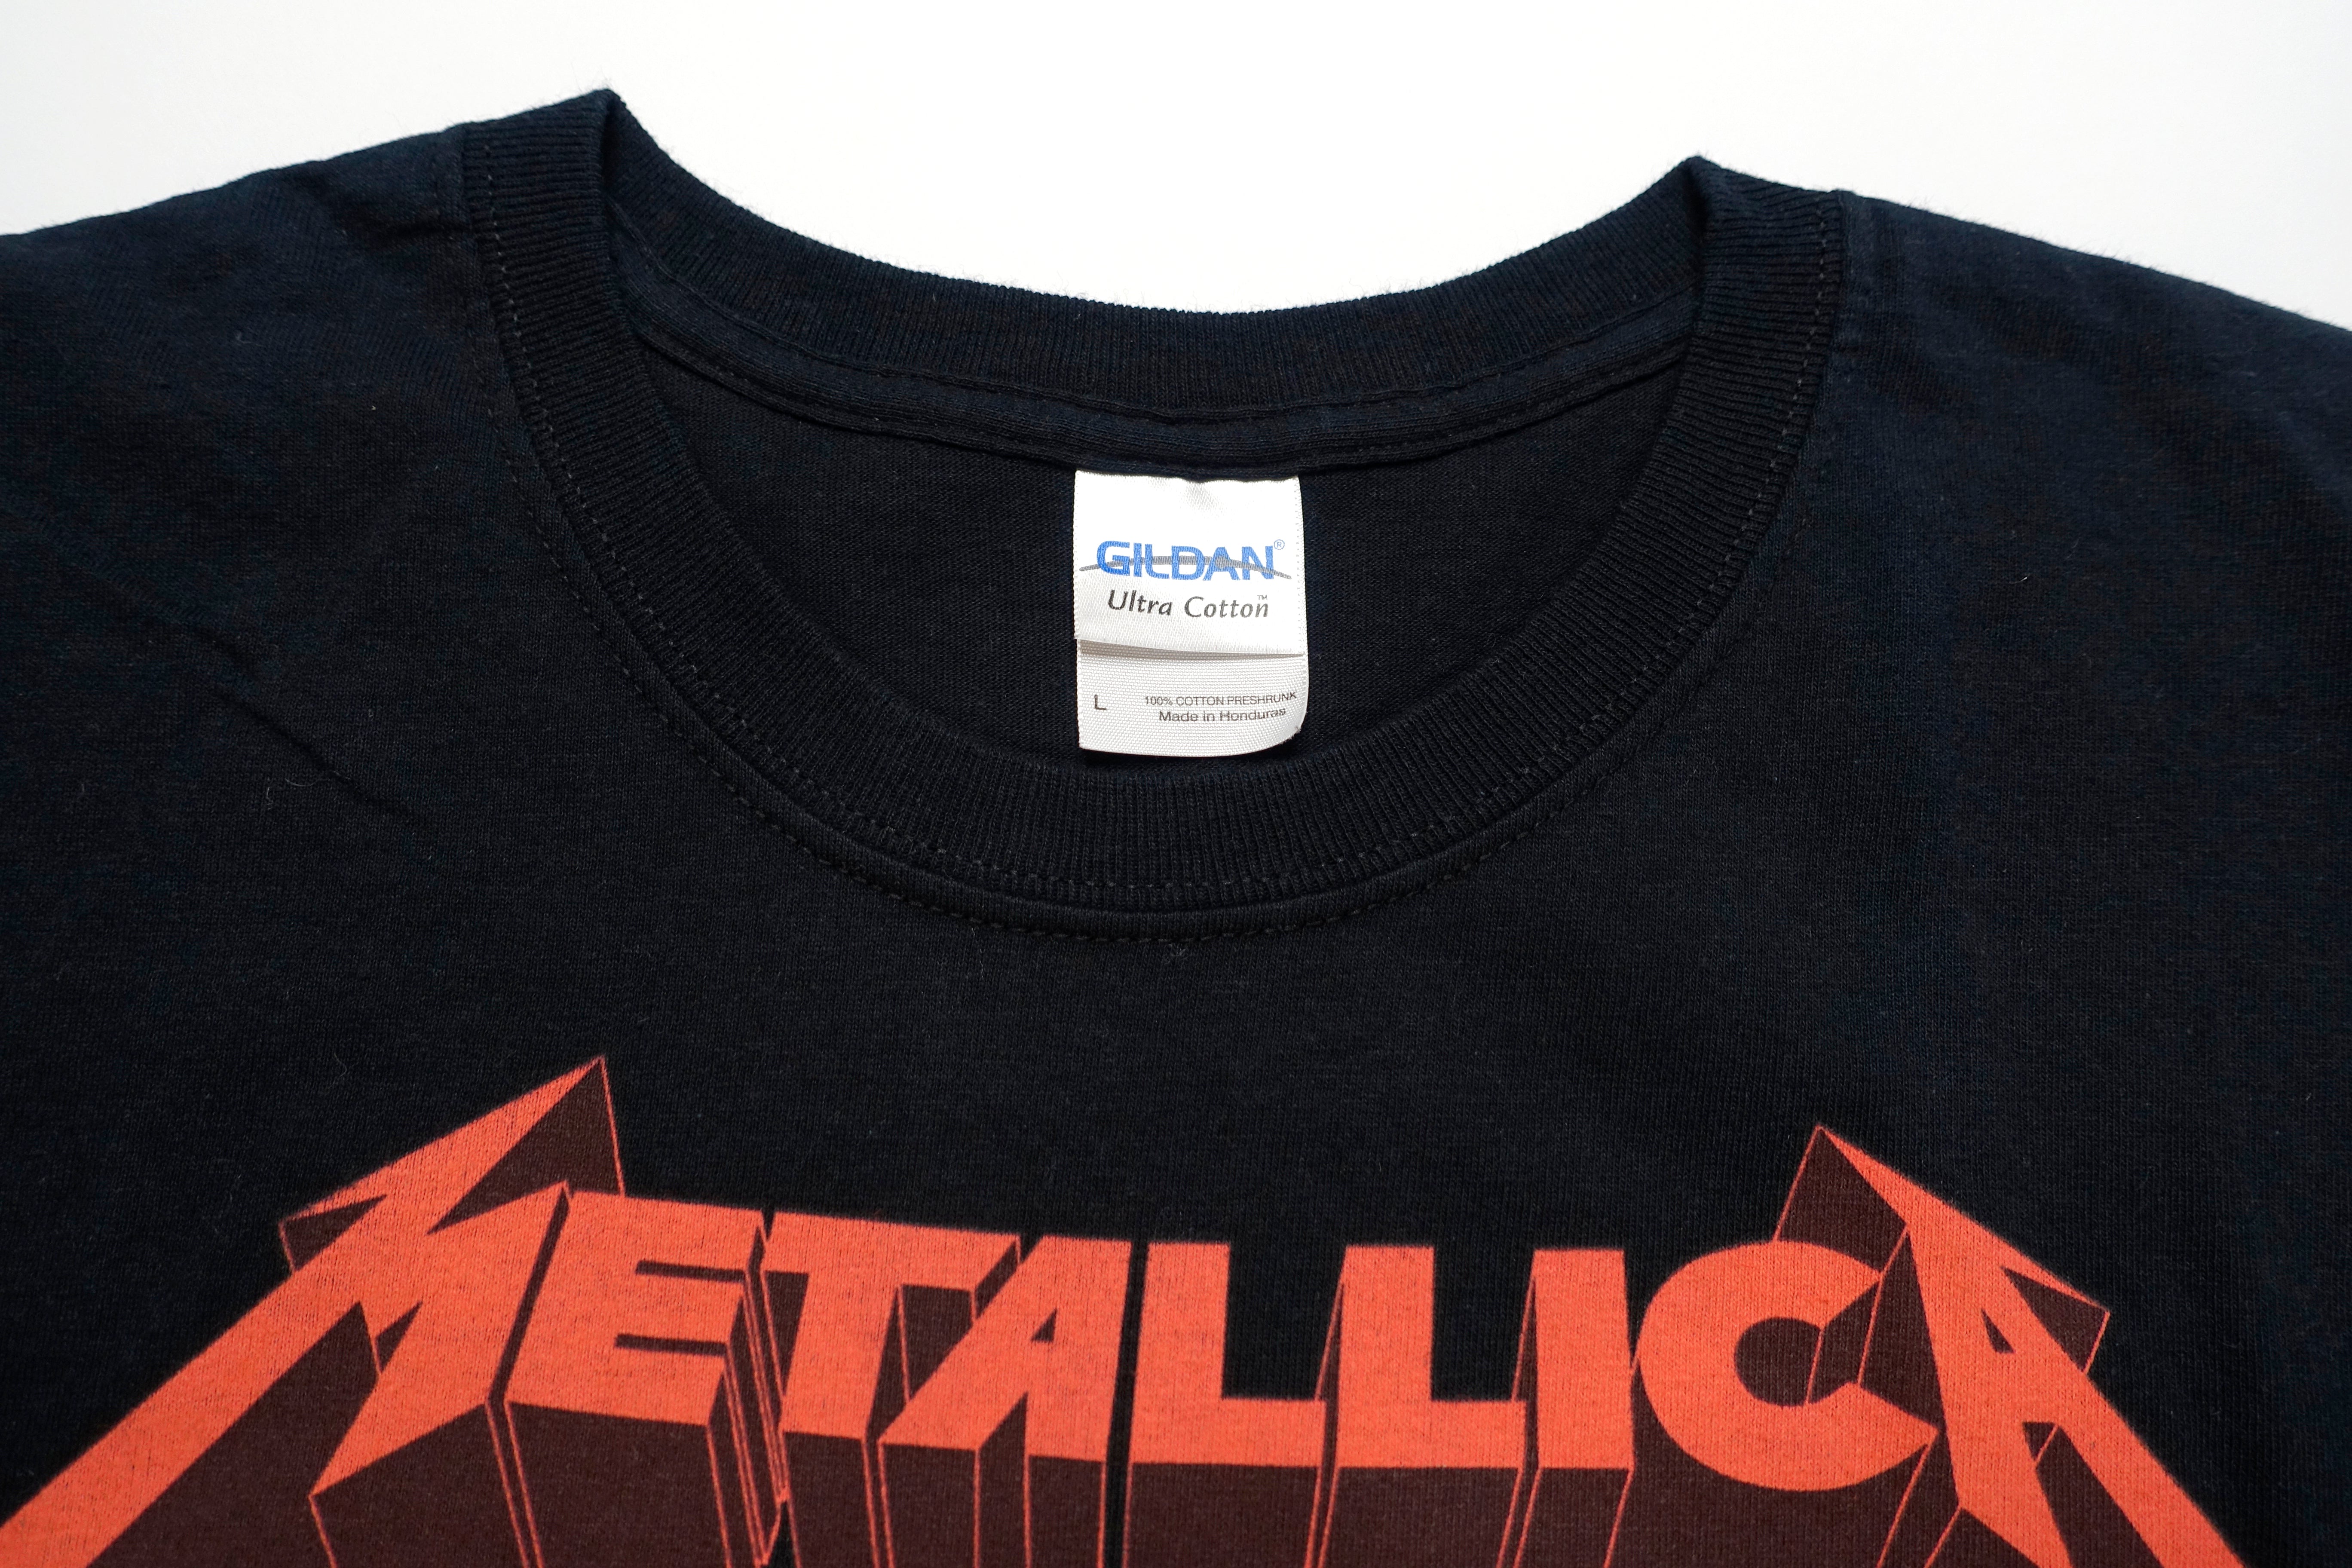 Metallica - Four Horsemen Tour Shirt Size Large (John Baizley Design)